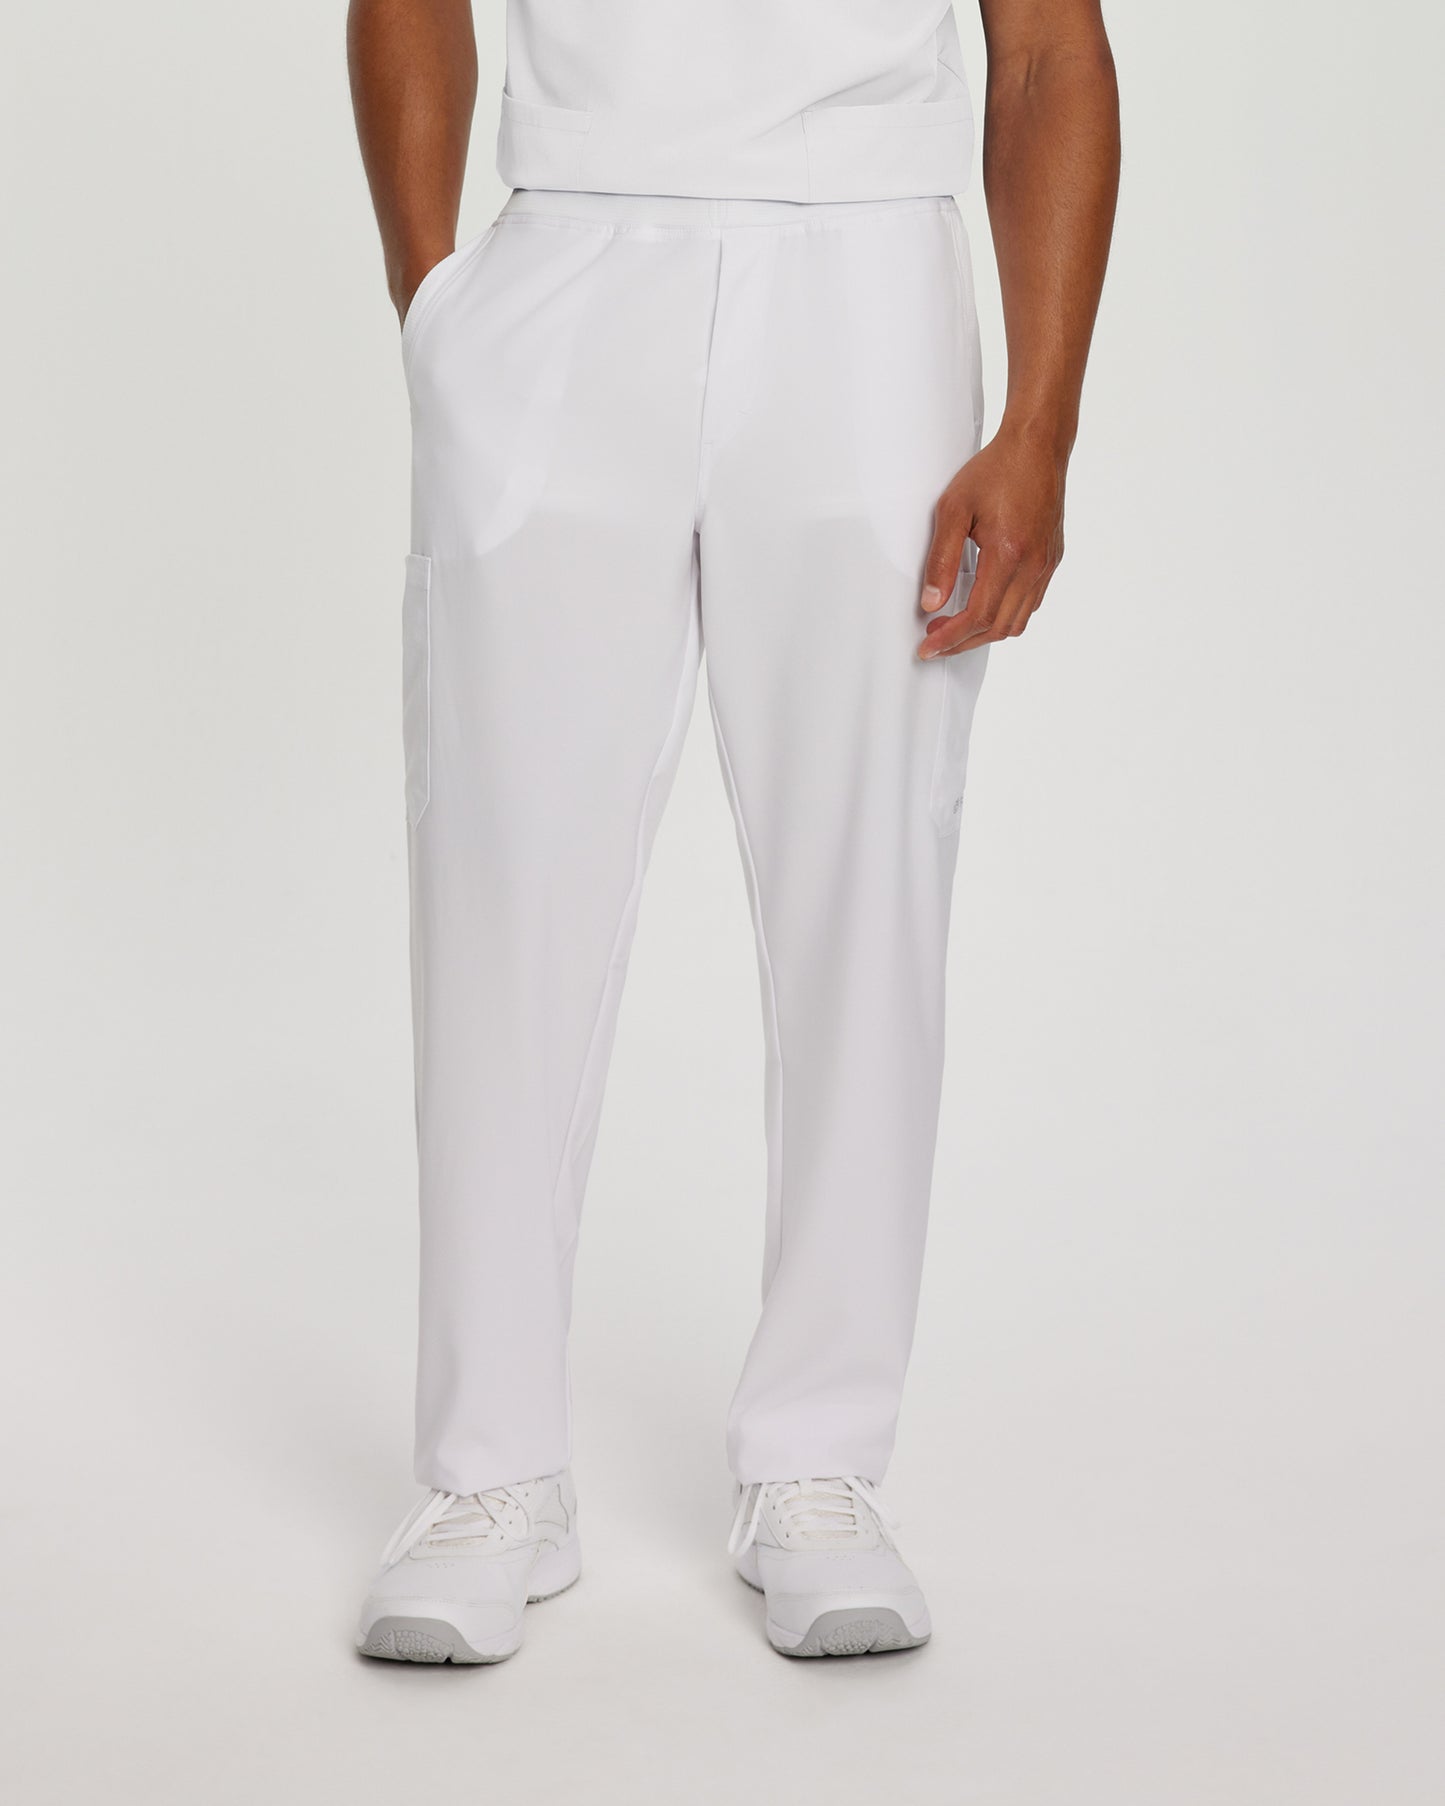 229S White Cross FIT Men's  Short Yoga-Style Pant